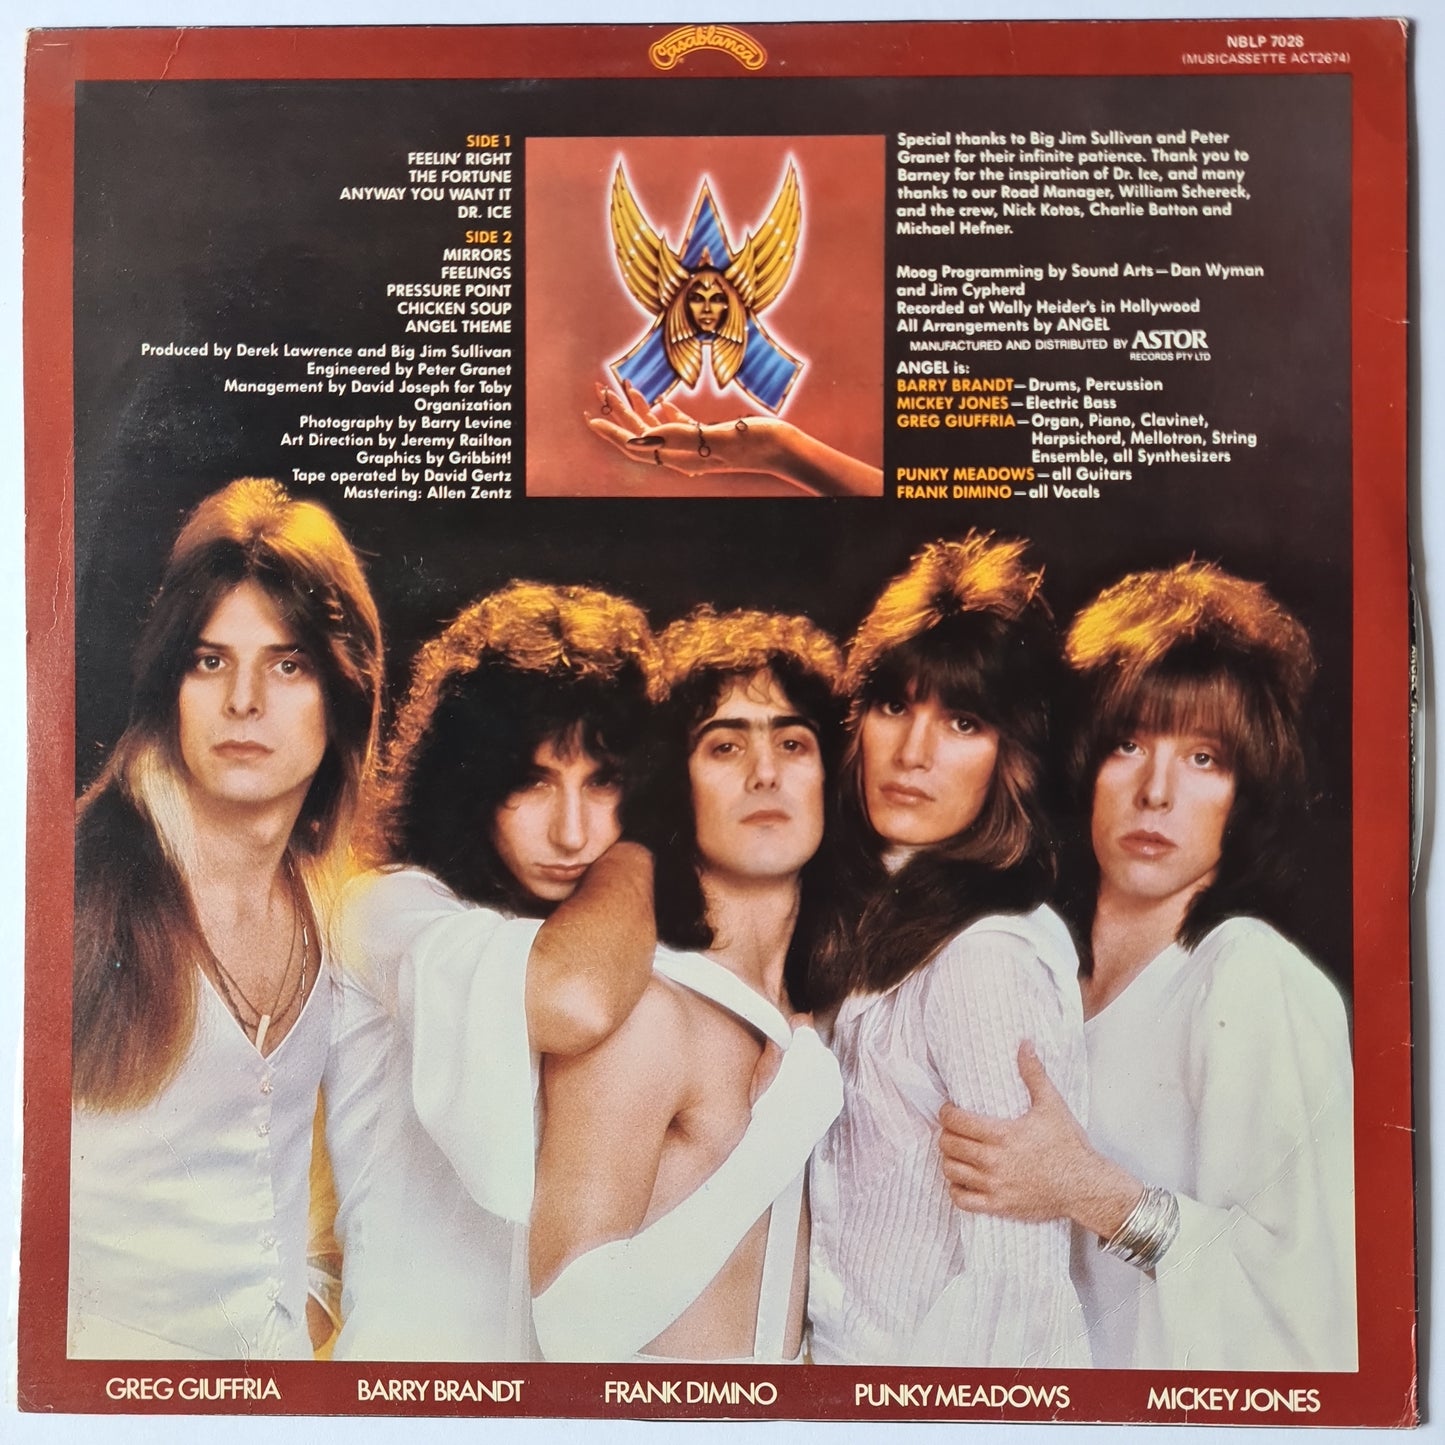 Angel – Helluva Band - 1976 - Vinyl Record